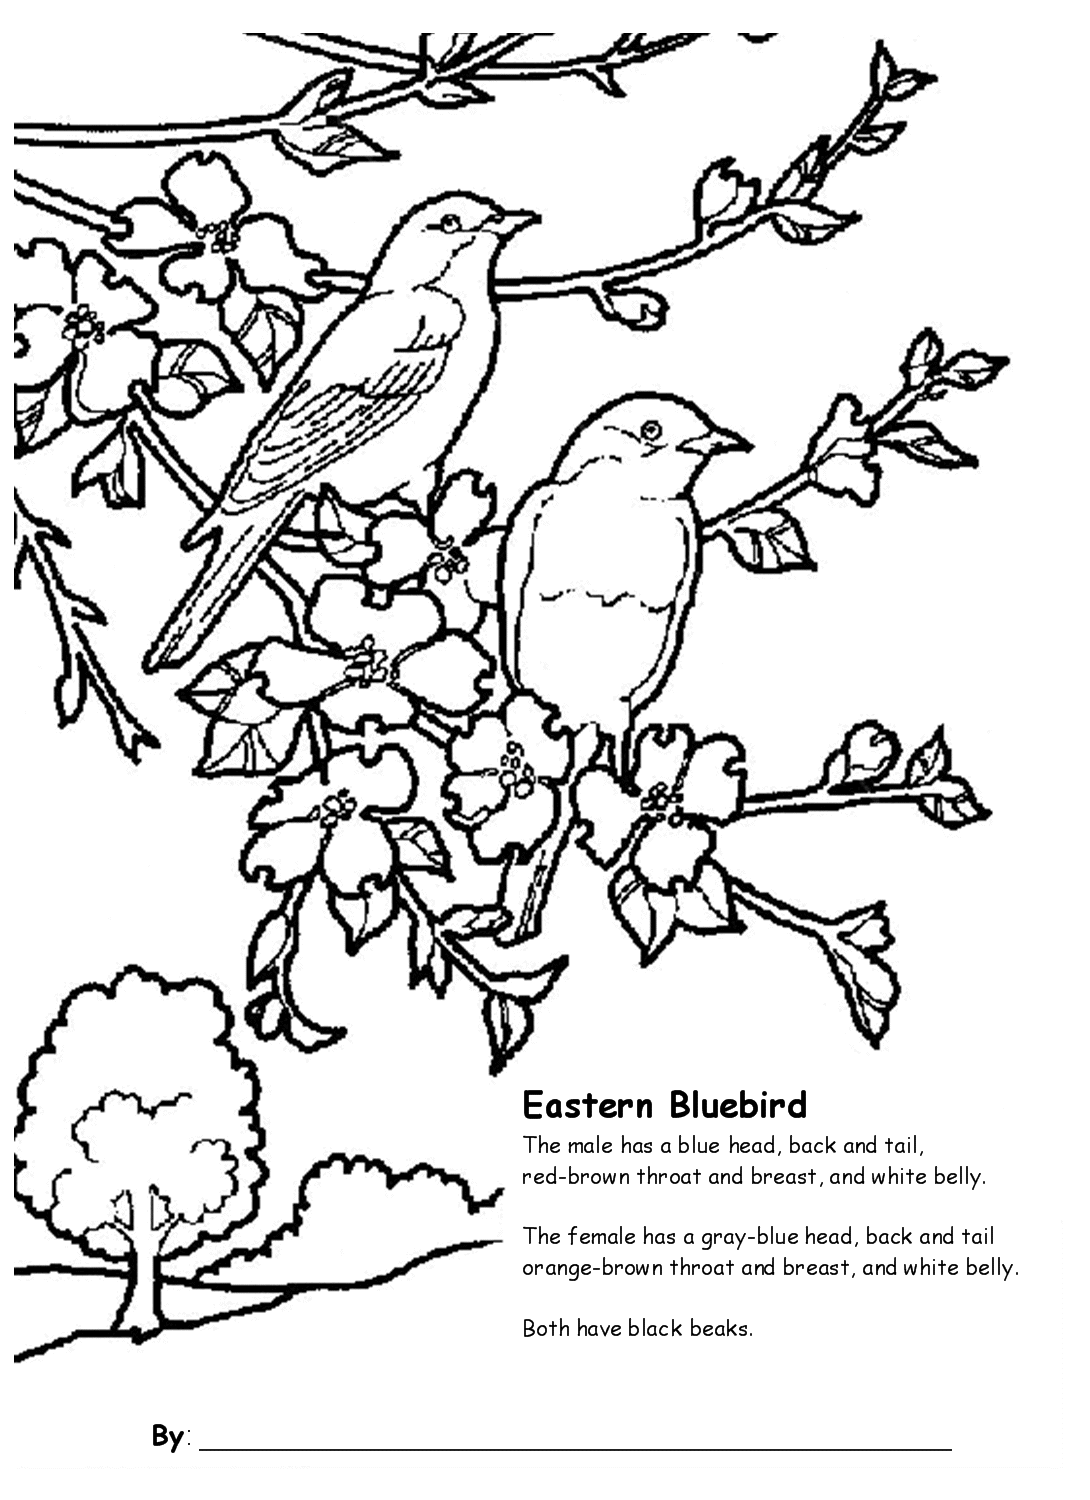 Eastern Bluebird coloring #2, Download drawings